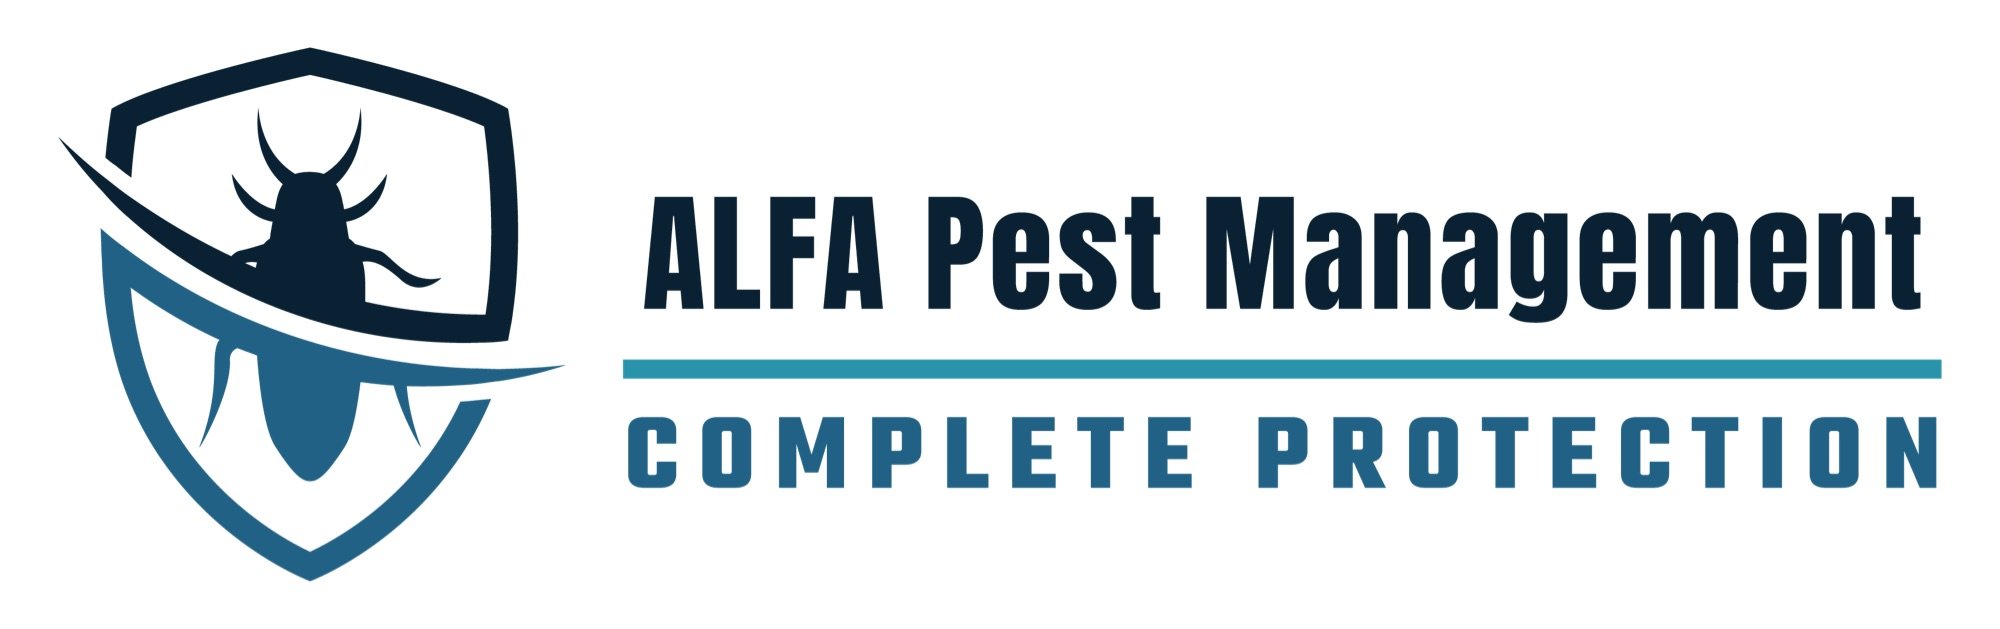 Alfa Pest Management Logo